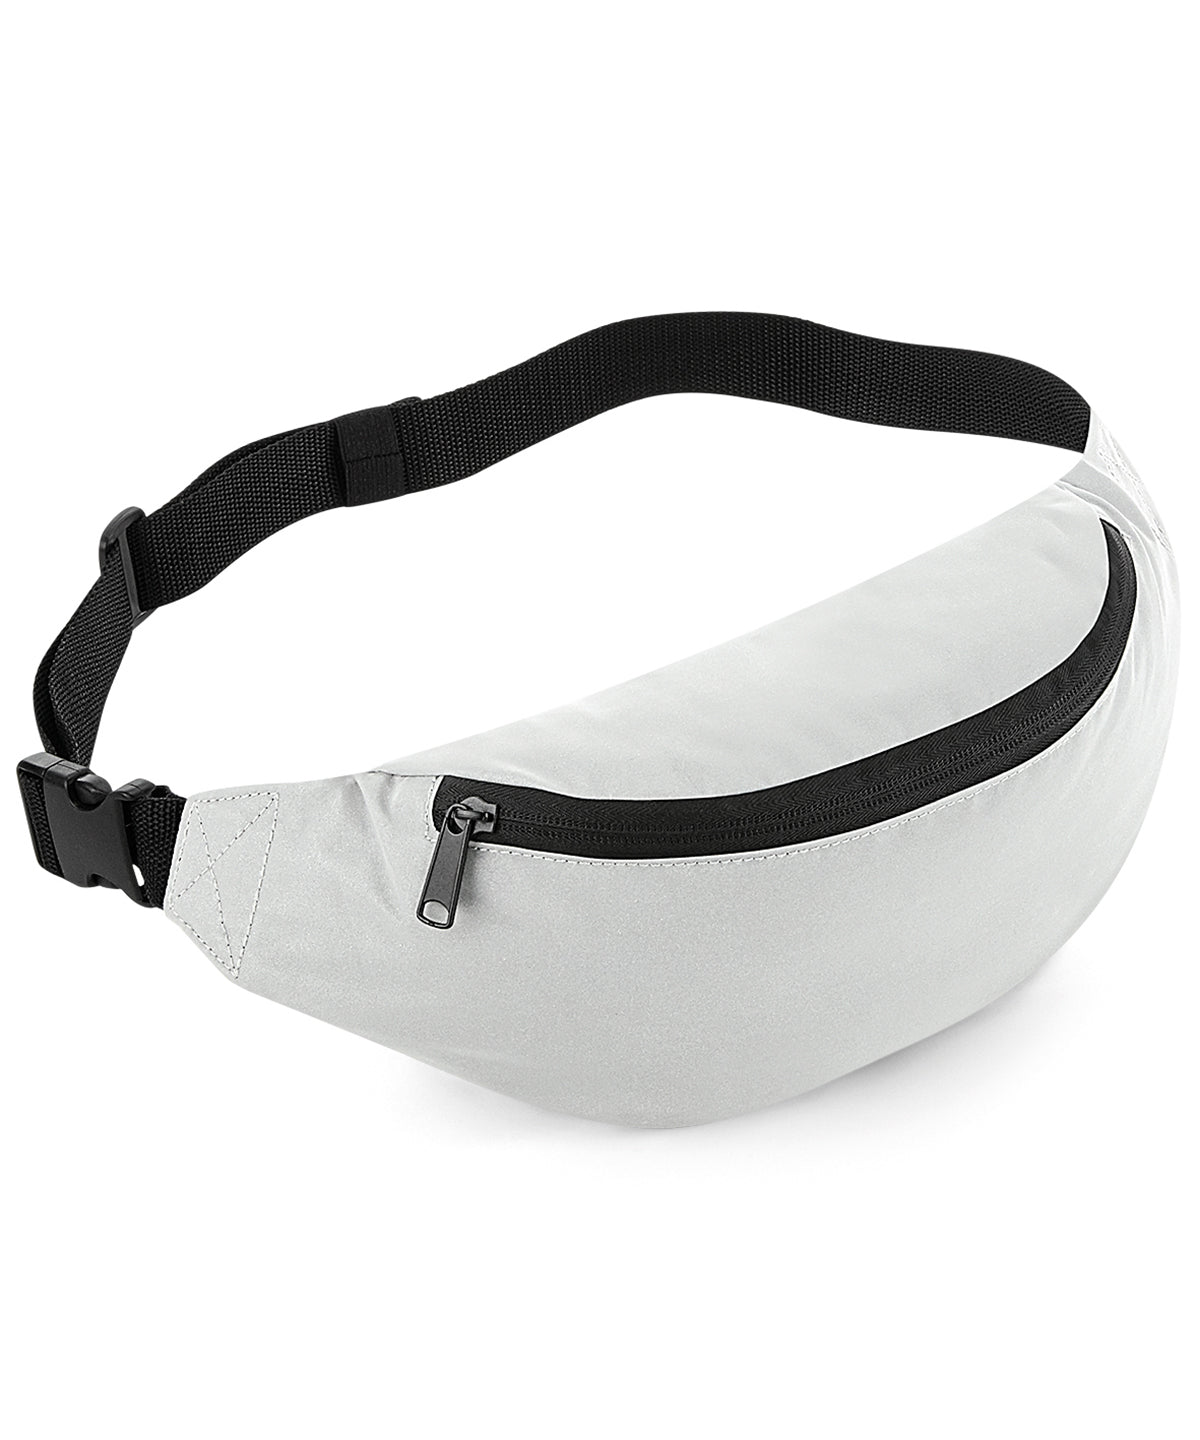 Personalised Bags - Silver Bagbase Reflective belt bag